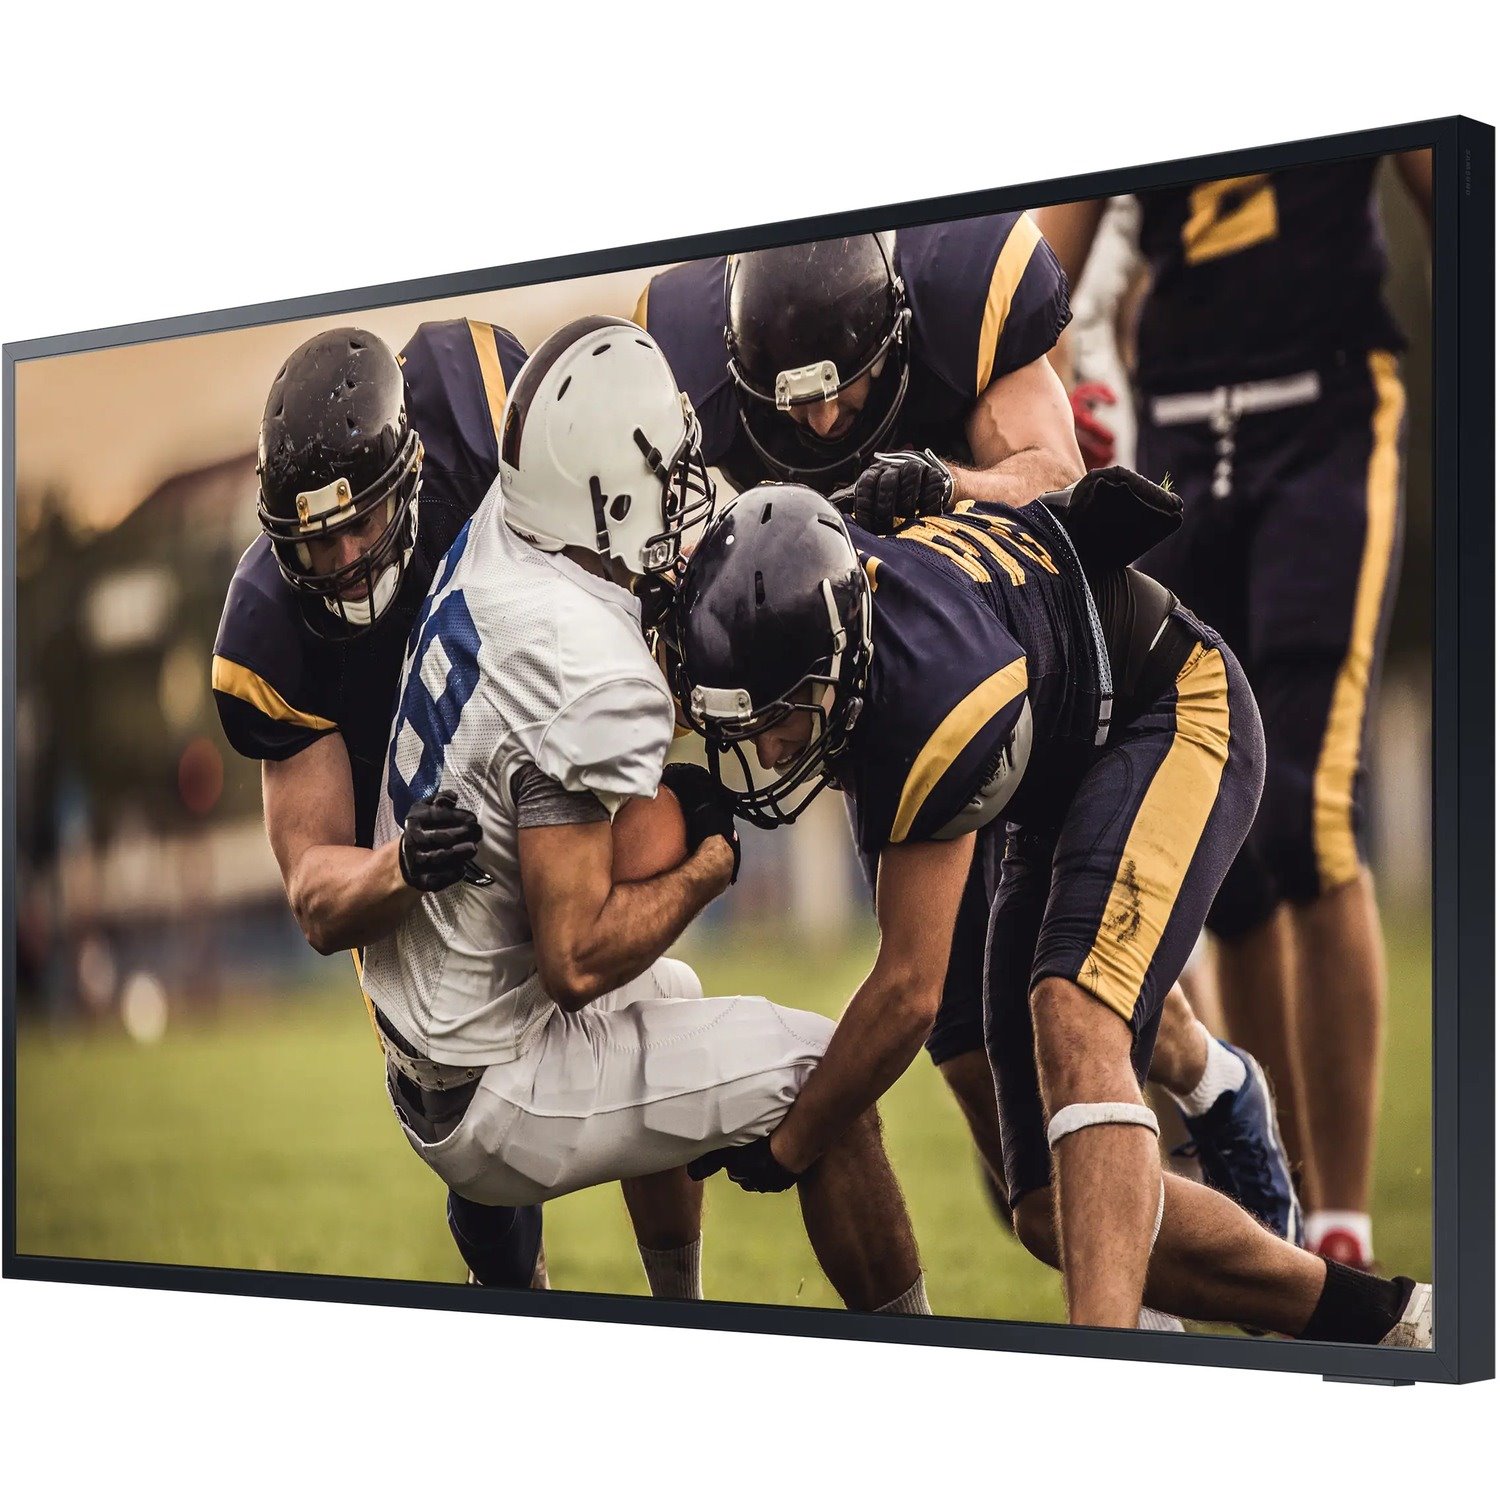 Samsung LH65BHTELGP 163.8 cm Smart LED-LCD TV - 4K UHDTV - Titan Black